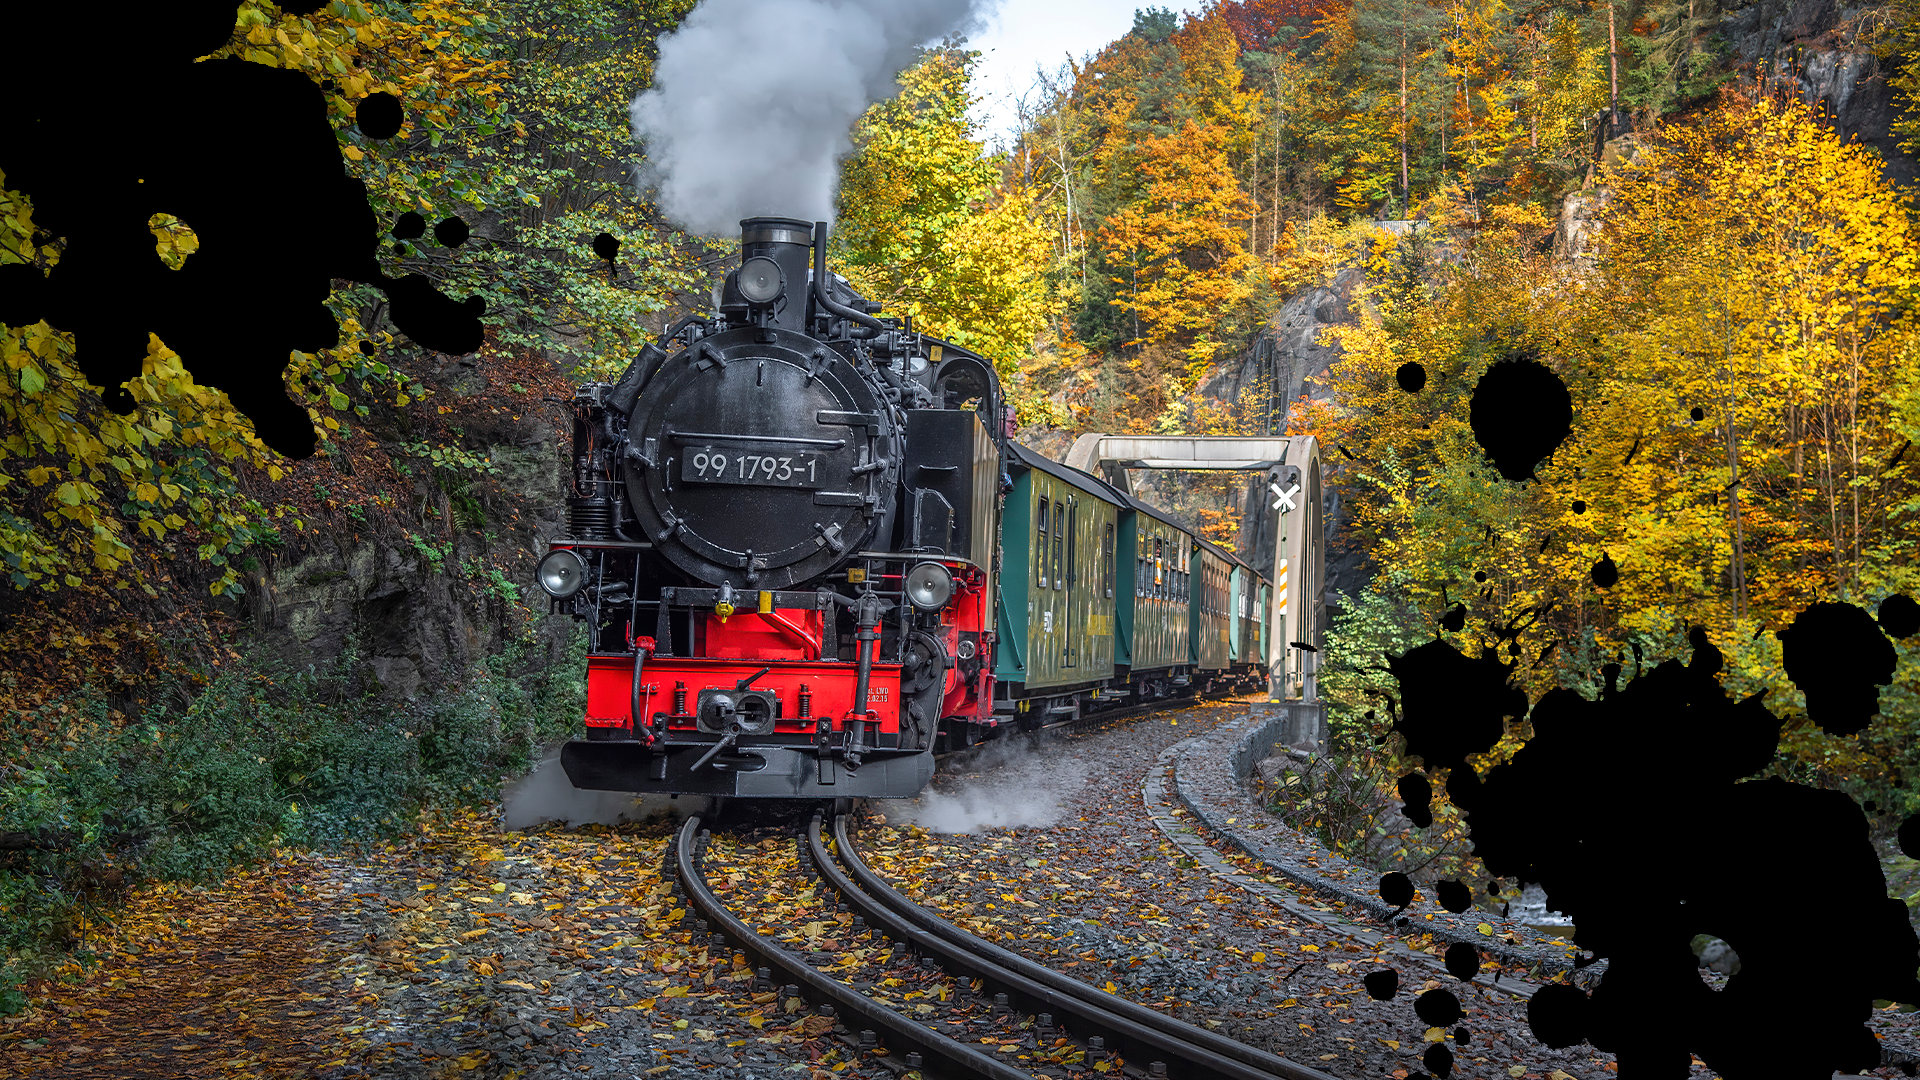 A steam train and splats